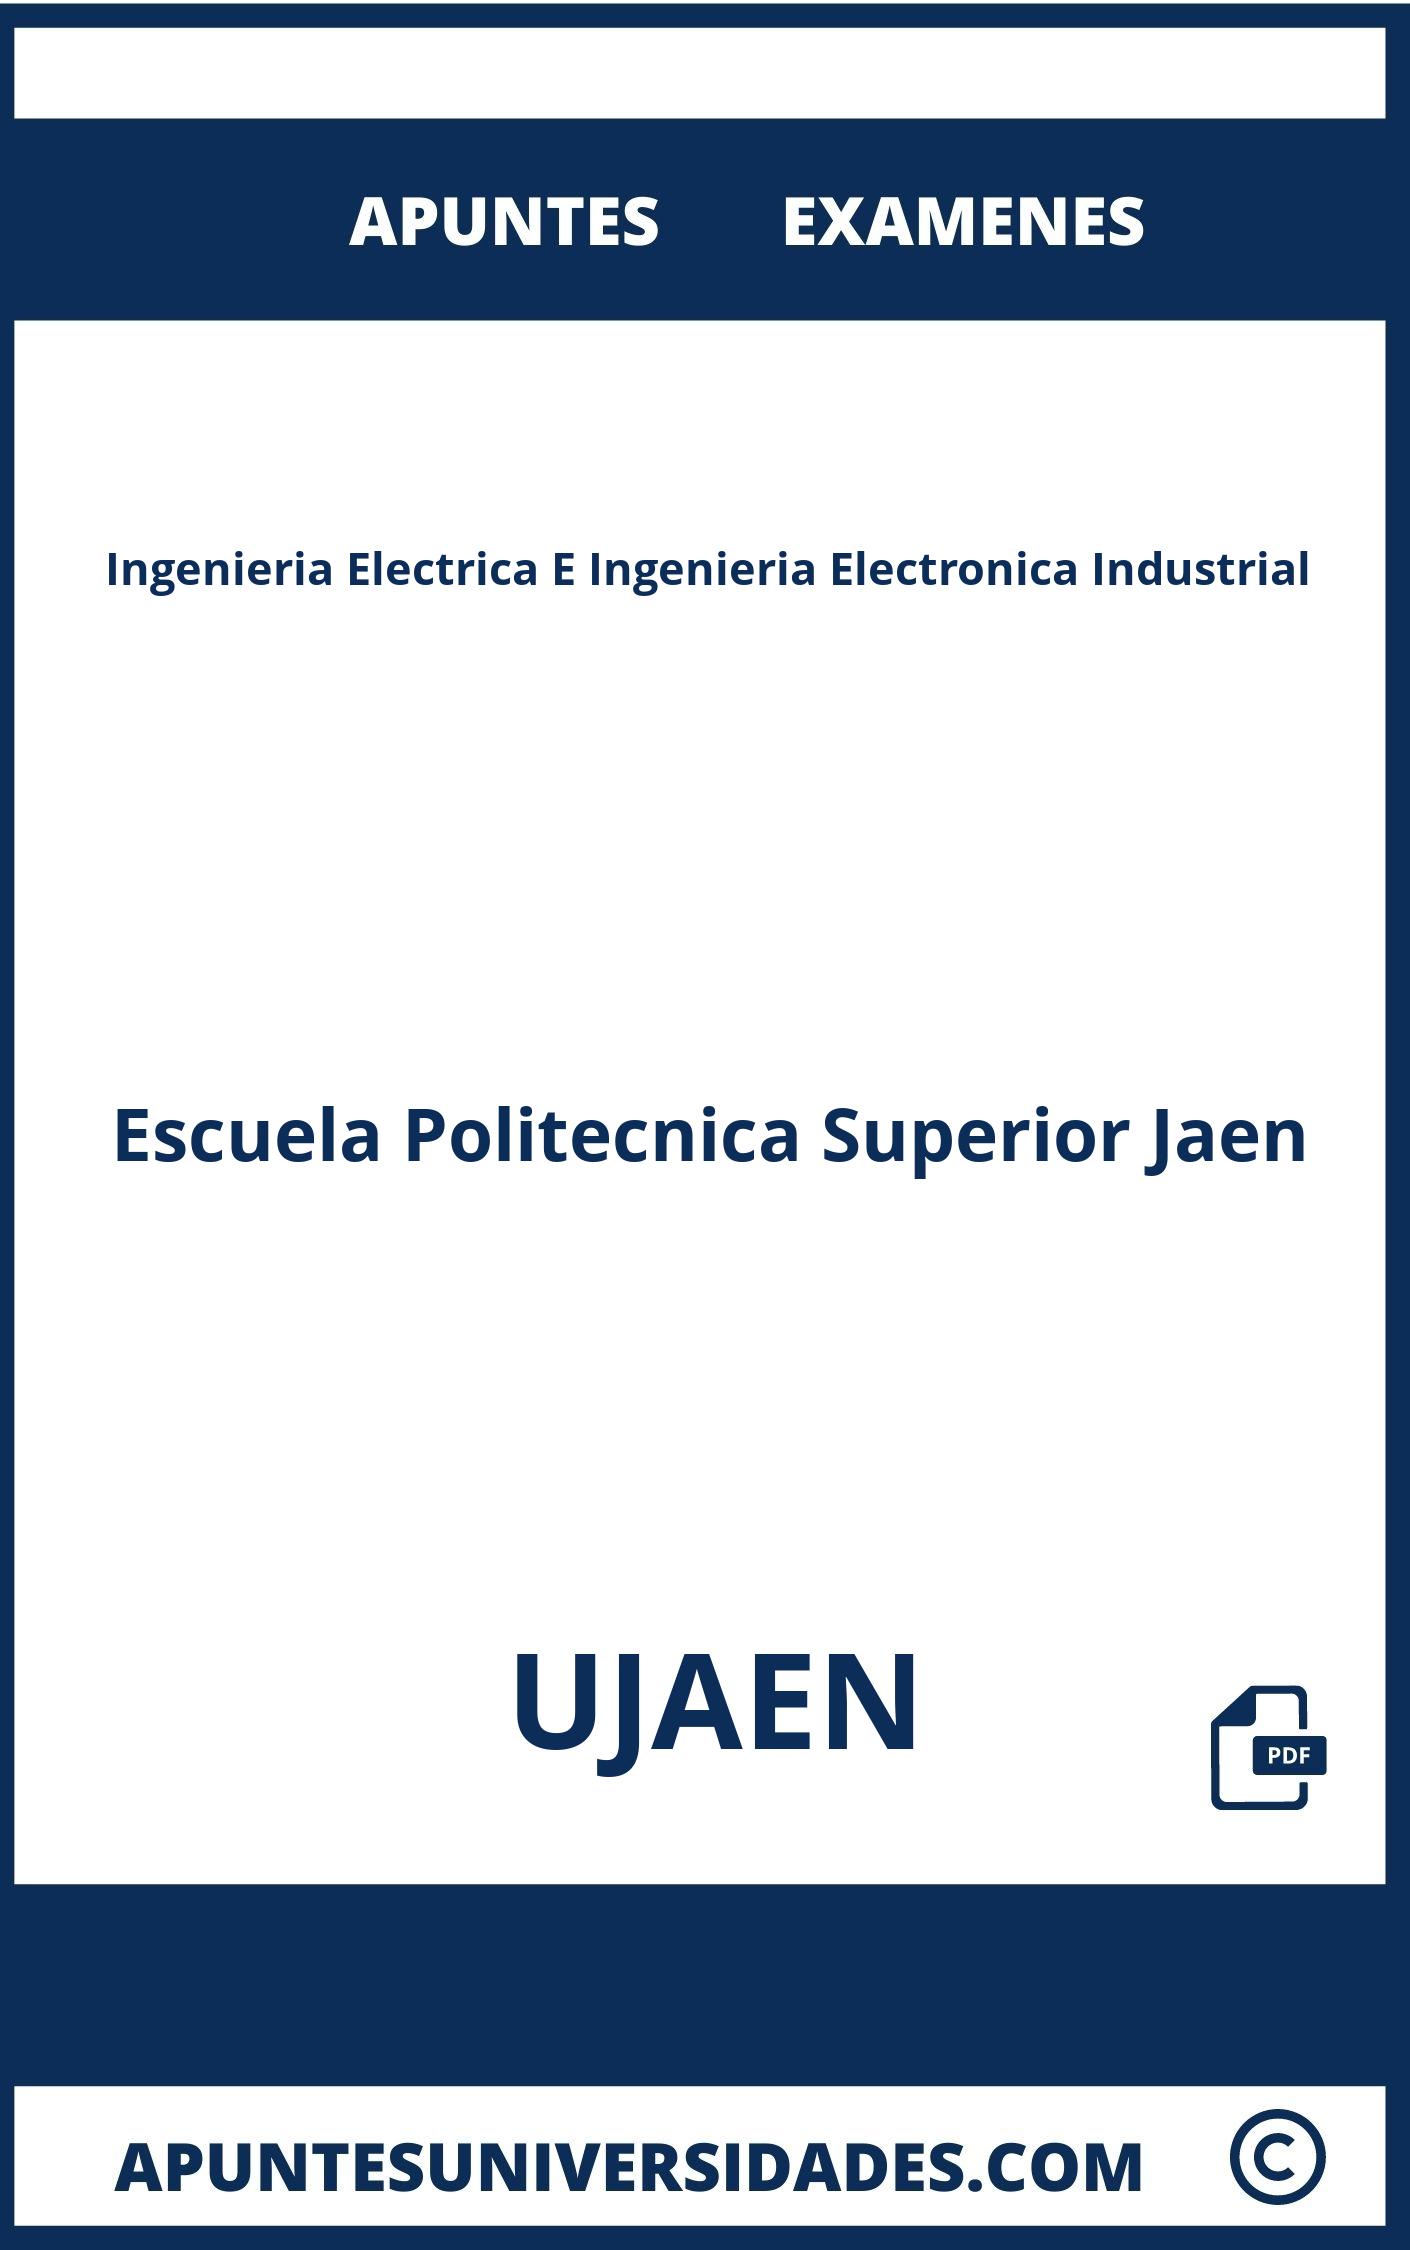 Apuntes Examenes Ingenieria Electrica E Ingenieria Electronica Industrial UJAEN